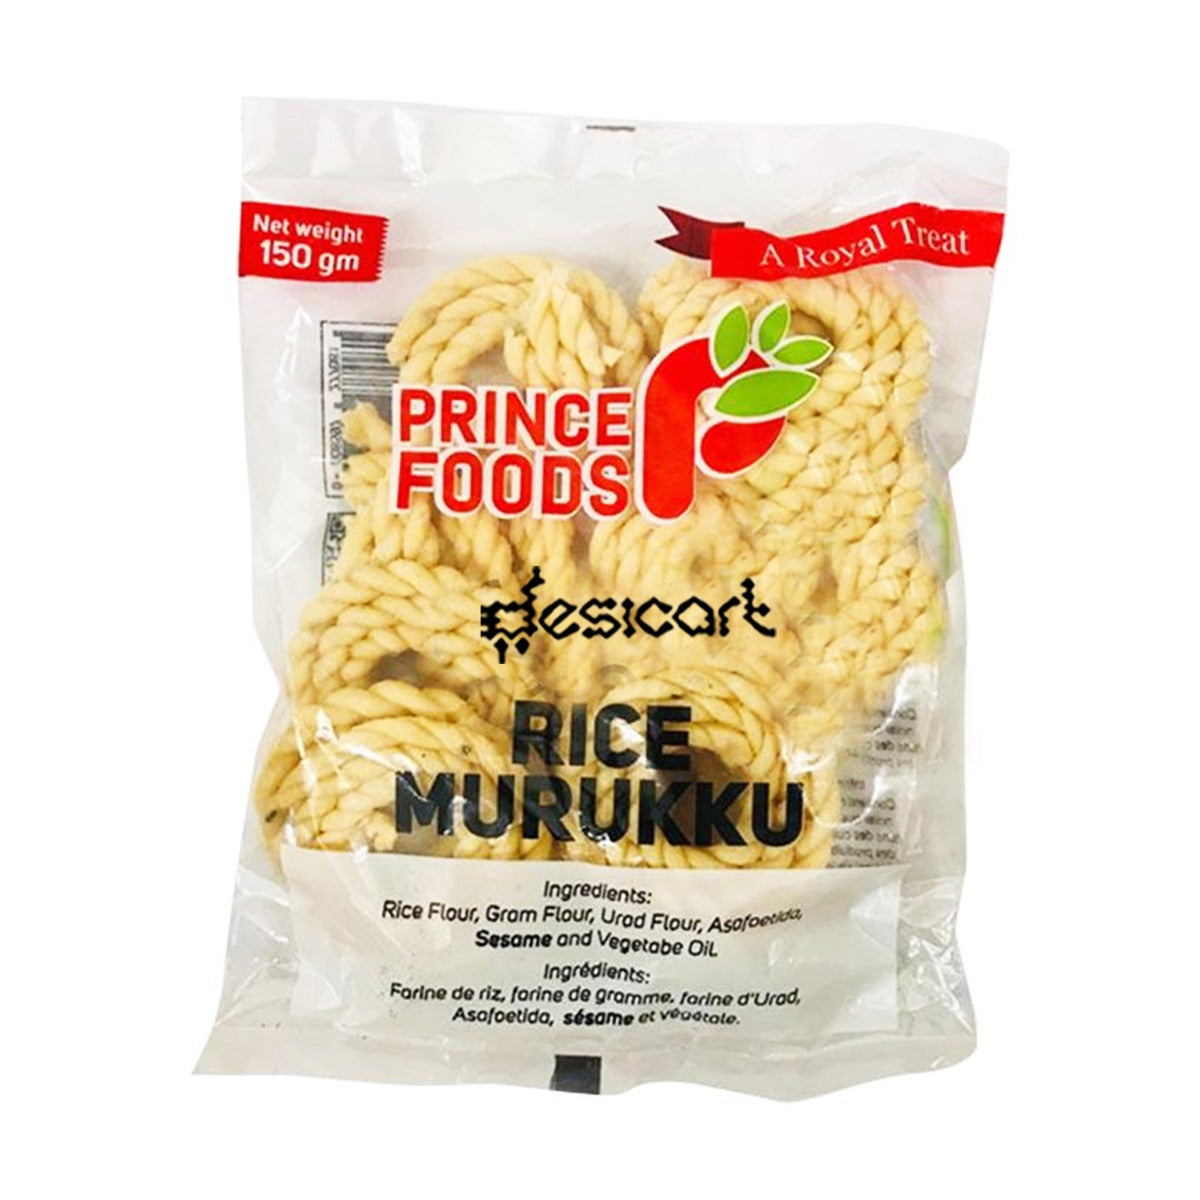 PRINCE FOODS RICE MURUKKU 150G BUY1 GET1 FREE